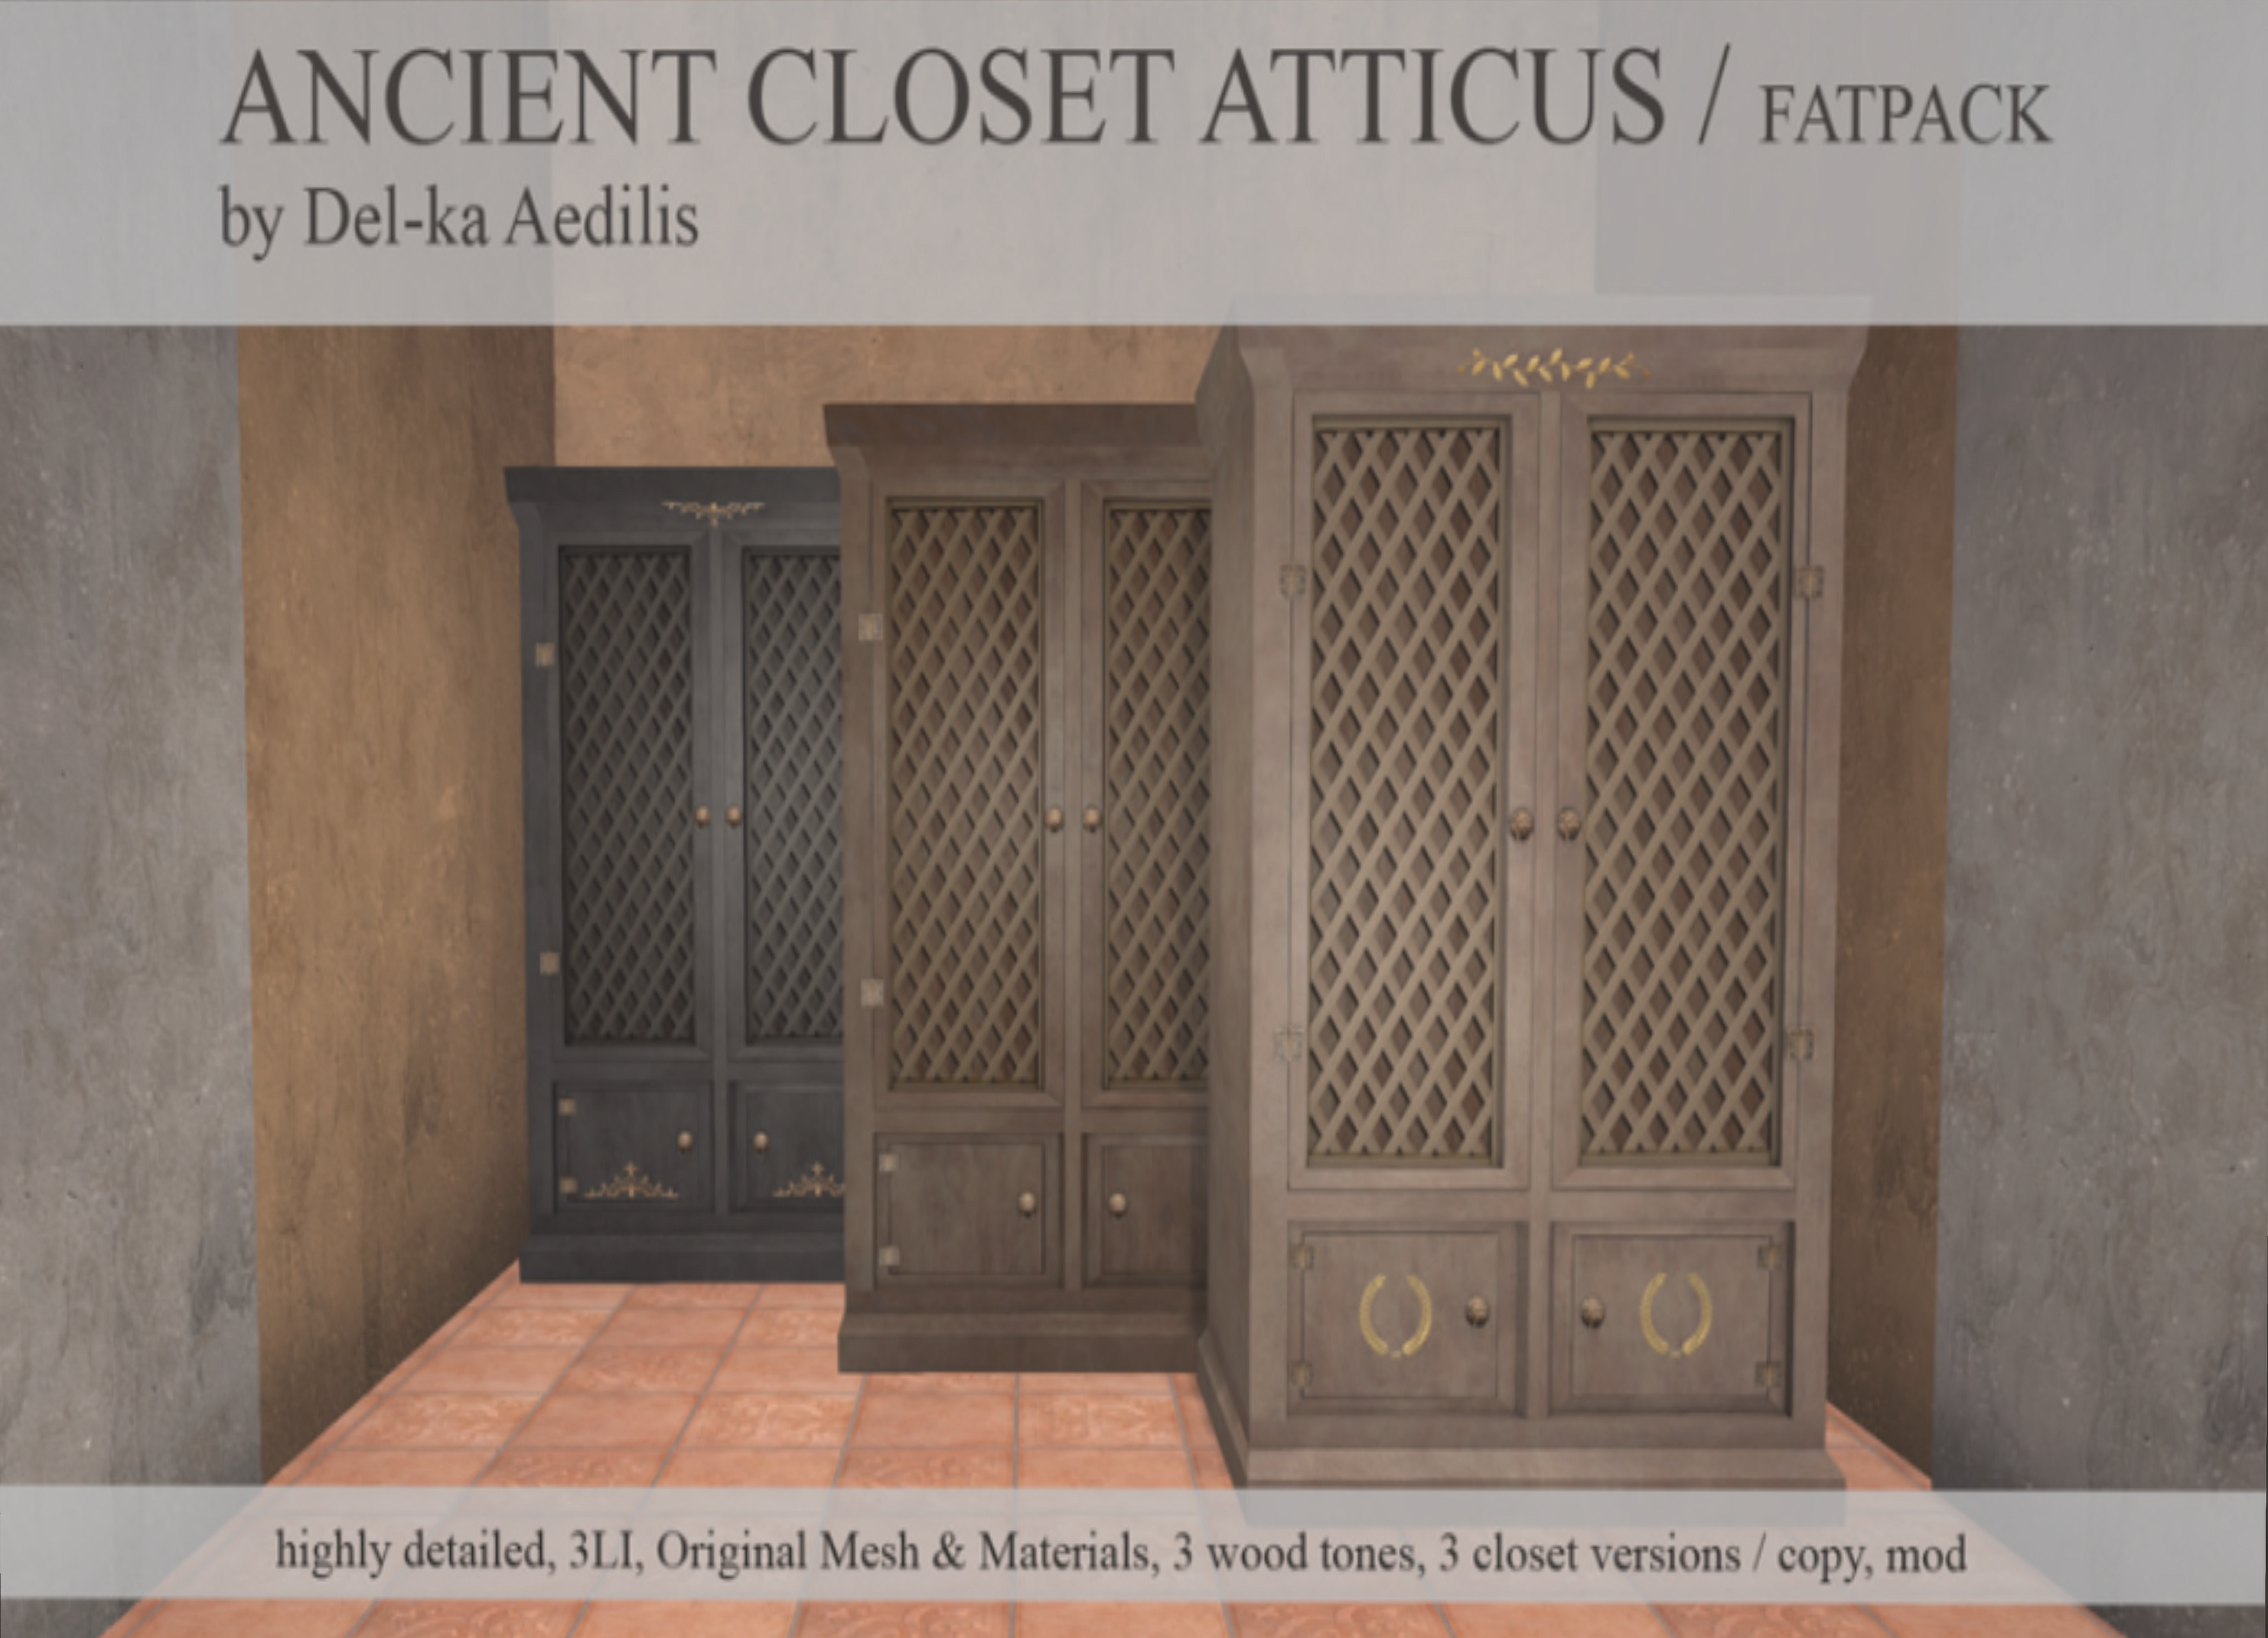 Del-ka Aedilis – Ancient Closet Atticus